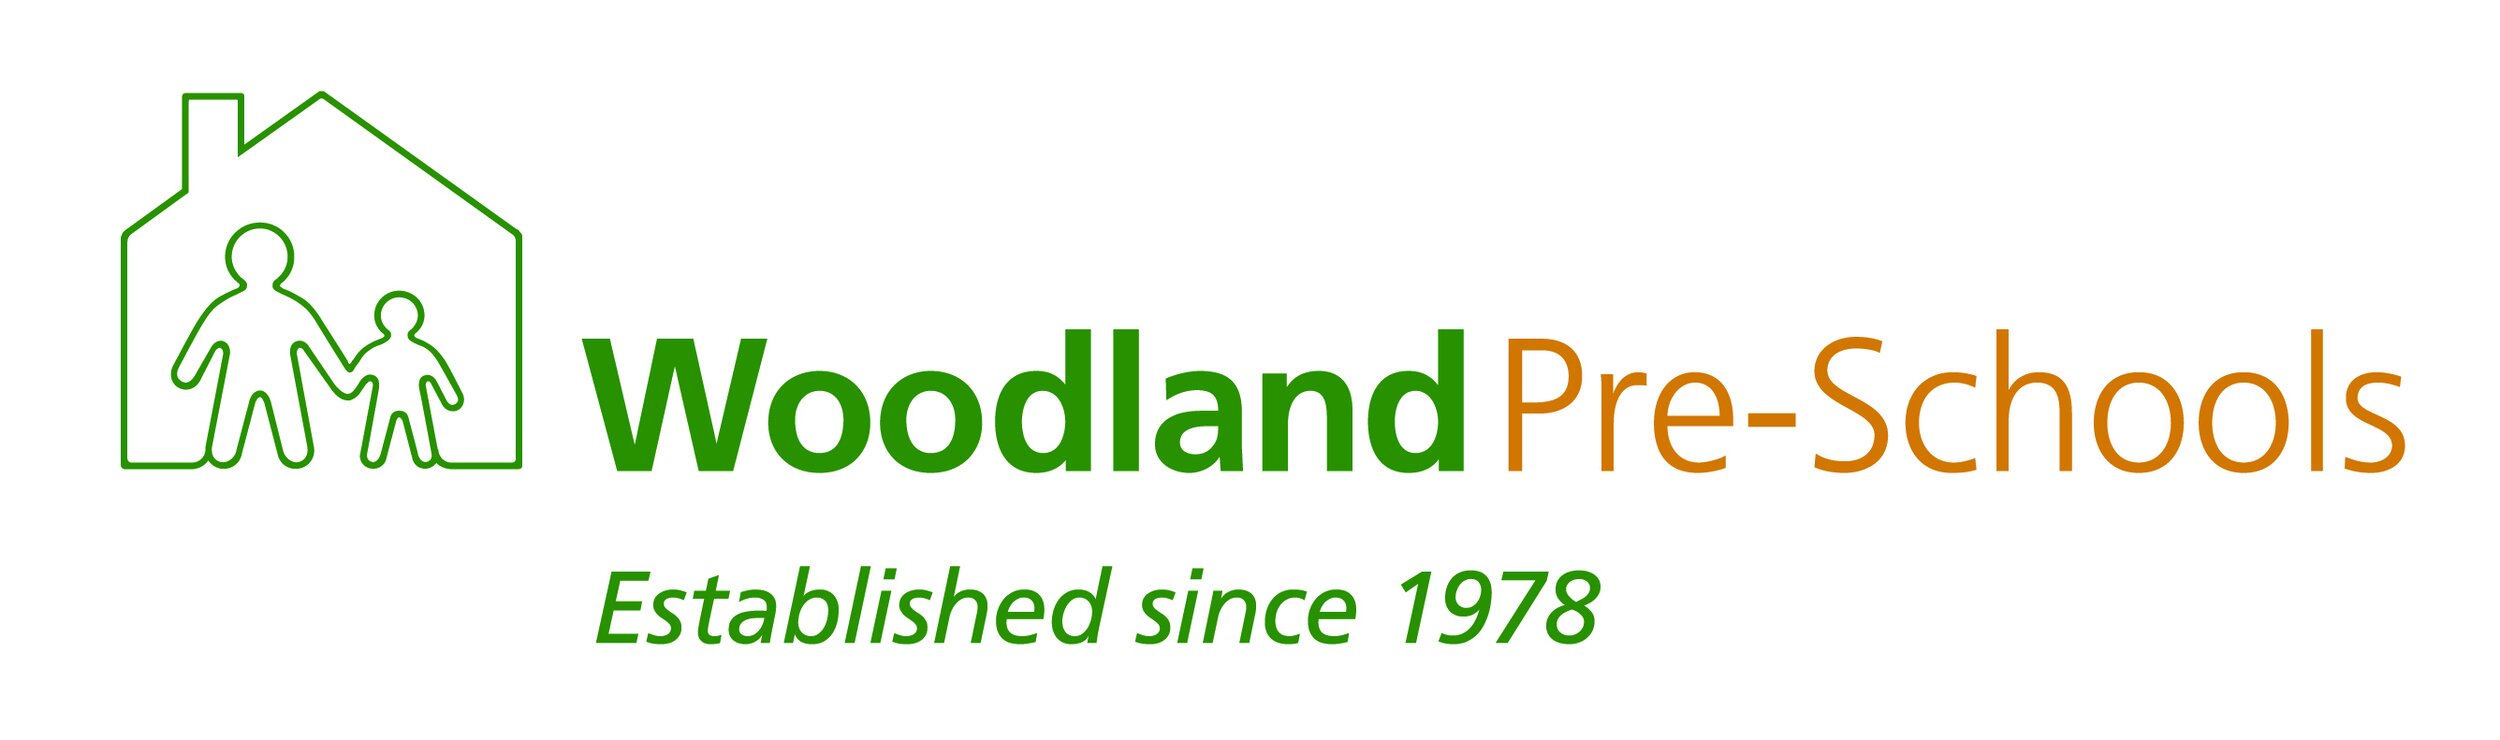 woodland-logo-new.jpg